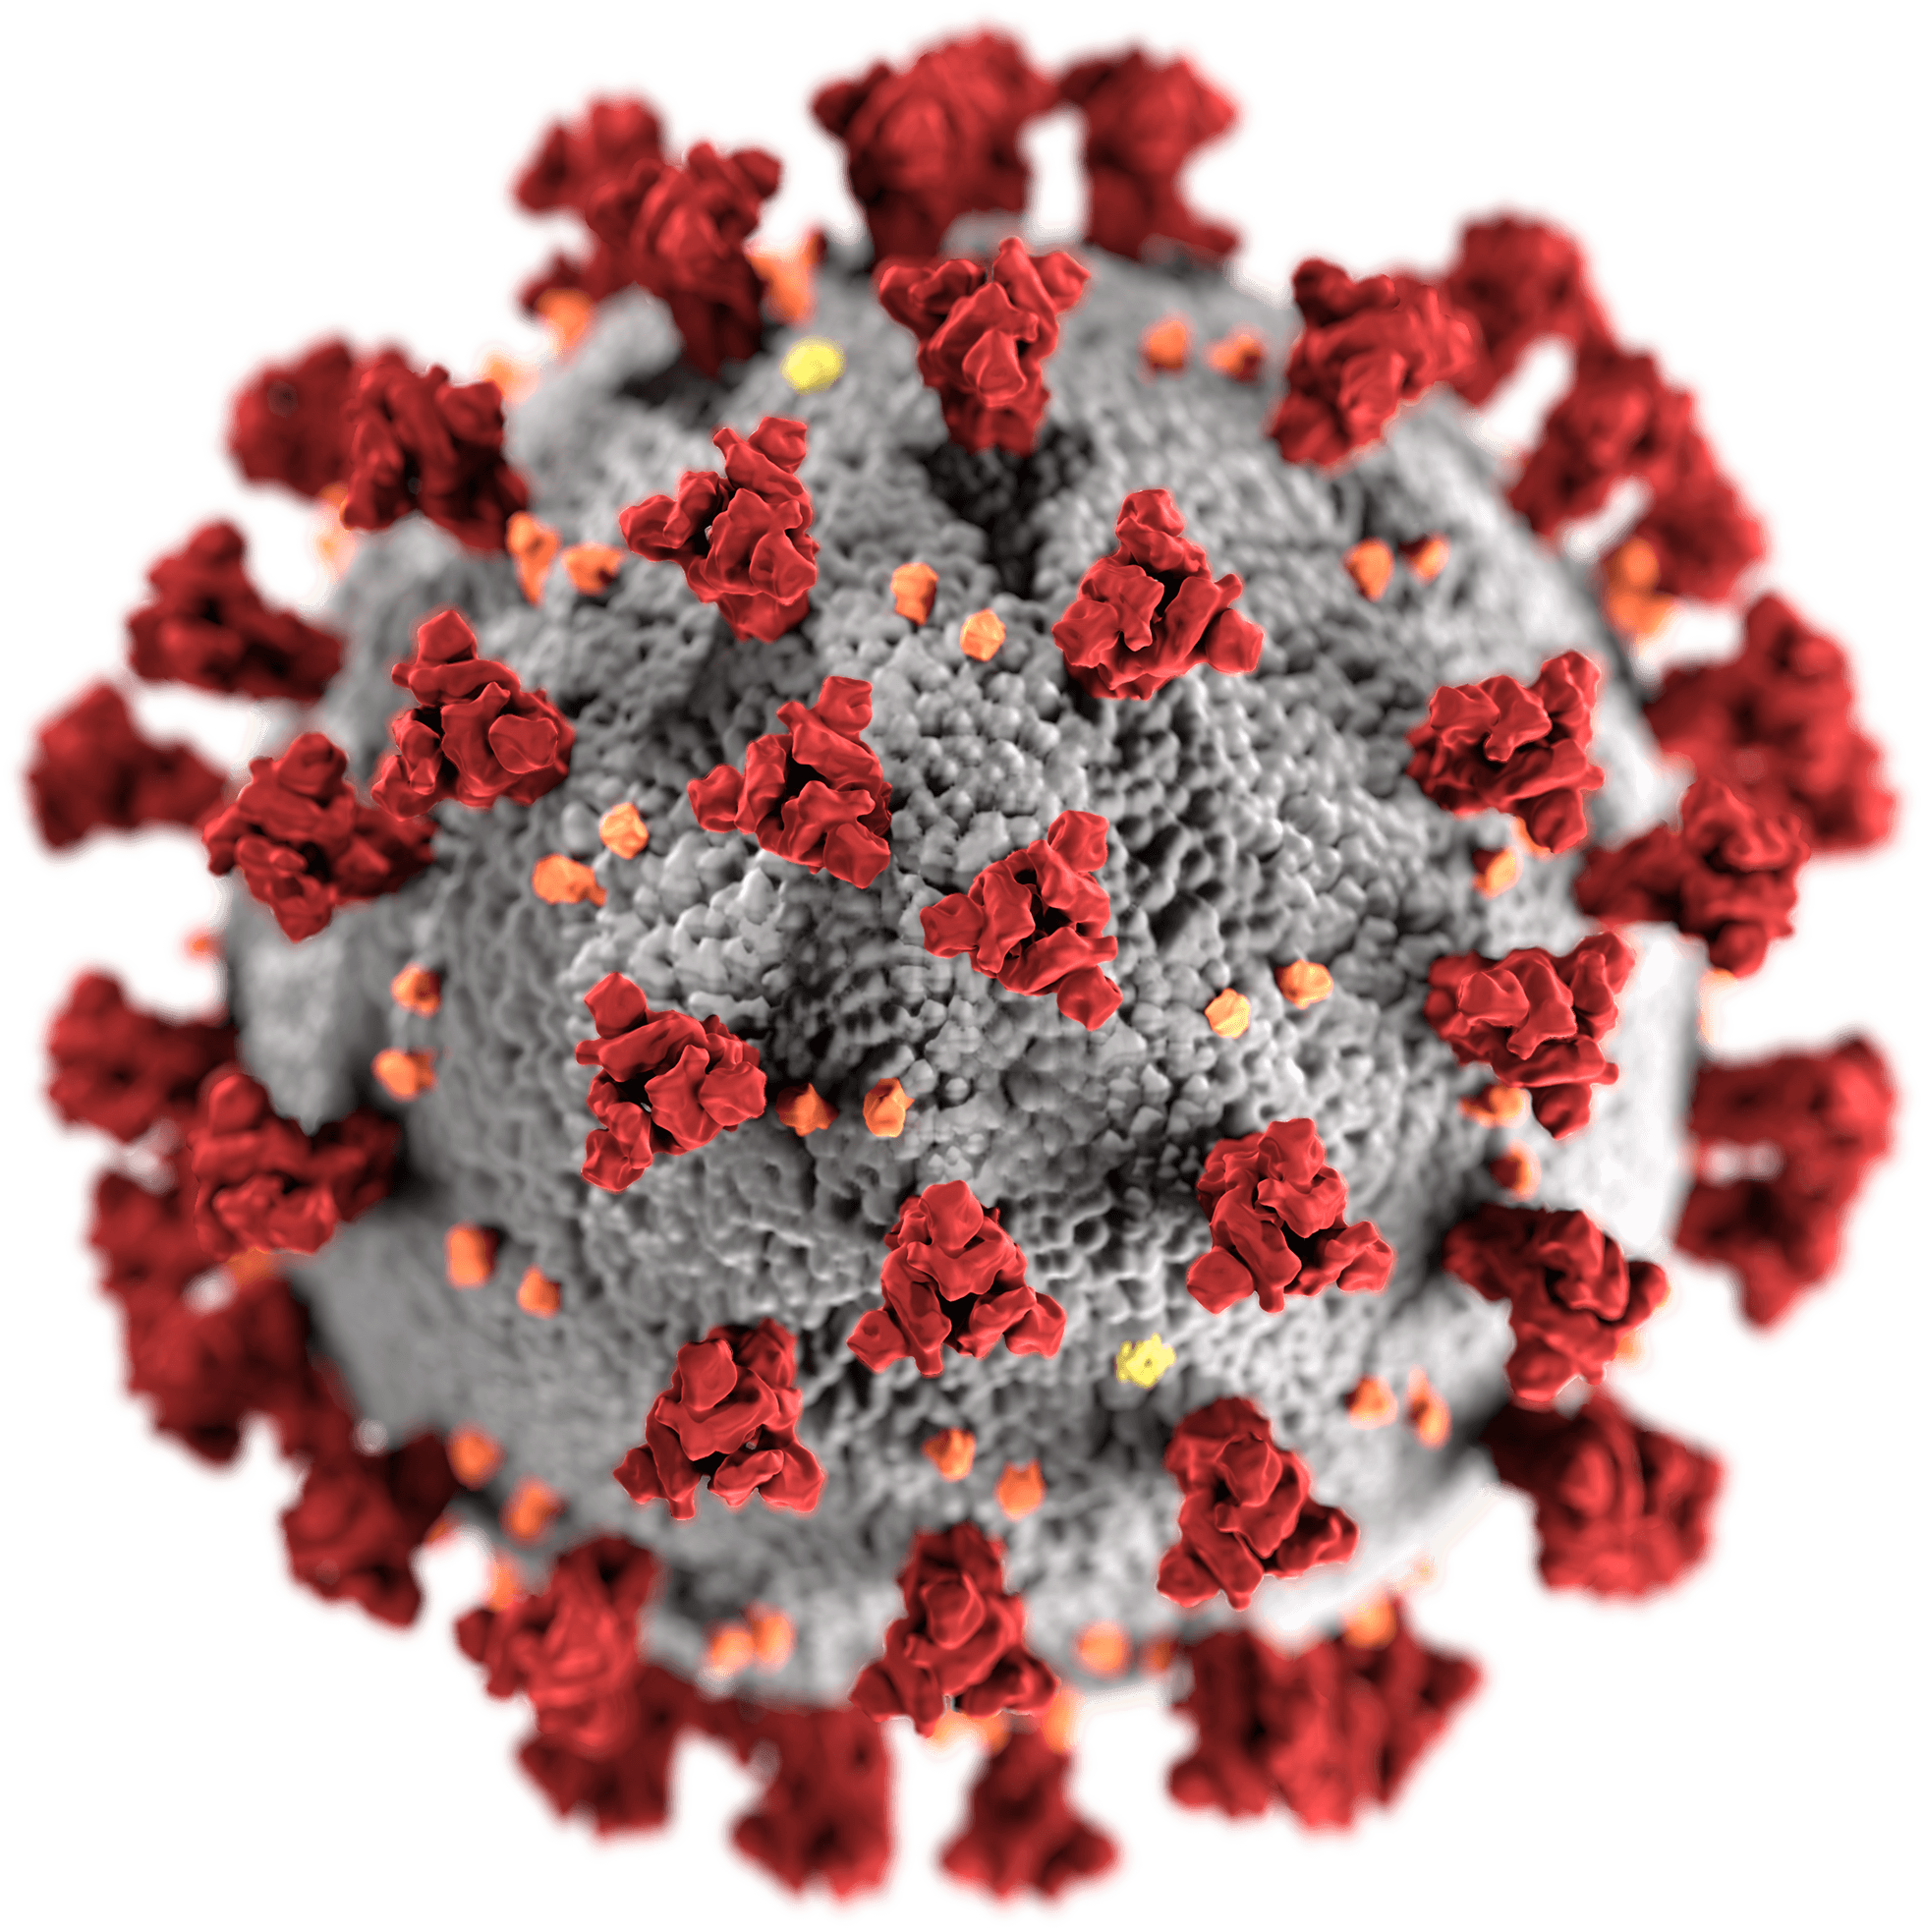 Severe acute respiratory syndrome coronavirus 2 (SARS-CoV-2) is the strain of coronavirus that causes coronavirus disease 2019 (COVID-19), the respiratory illness responsible for the COVID-19 pandemic.